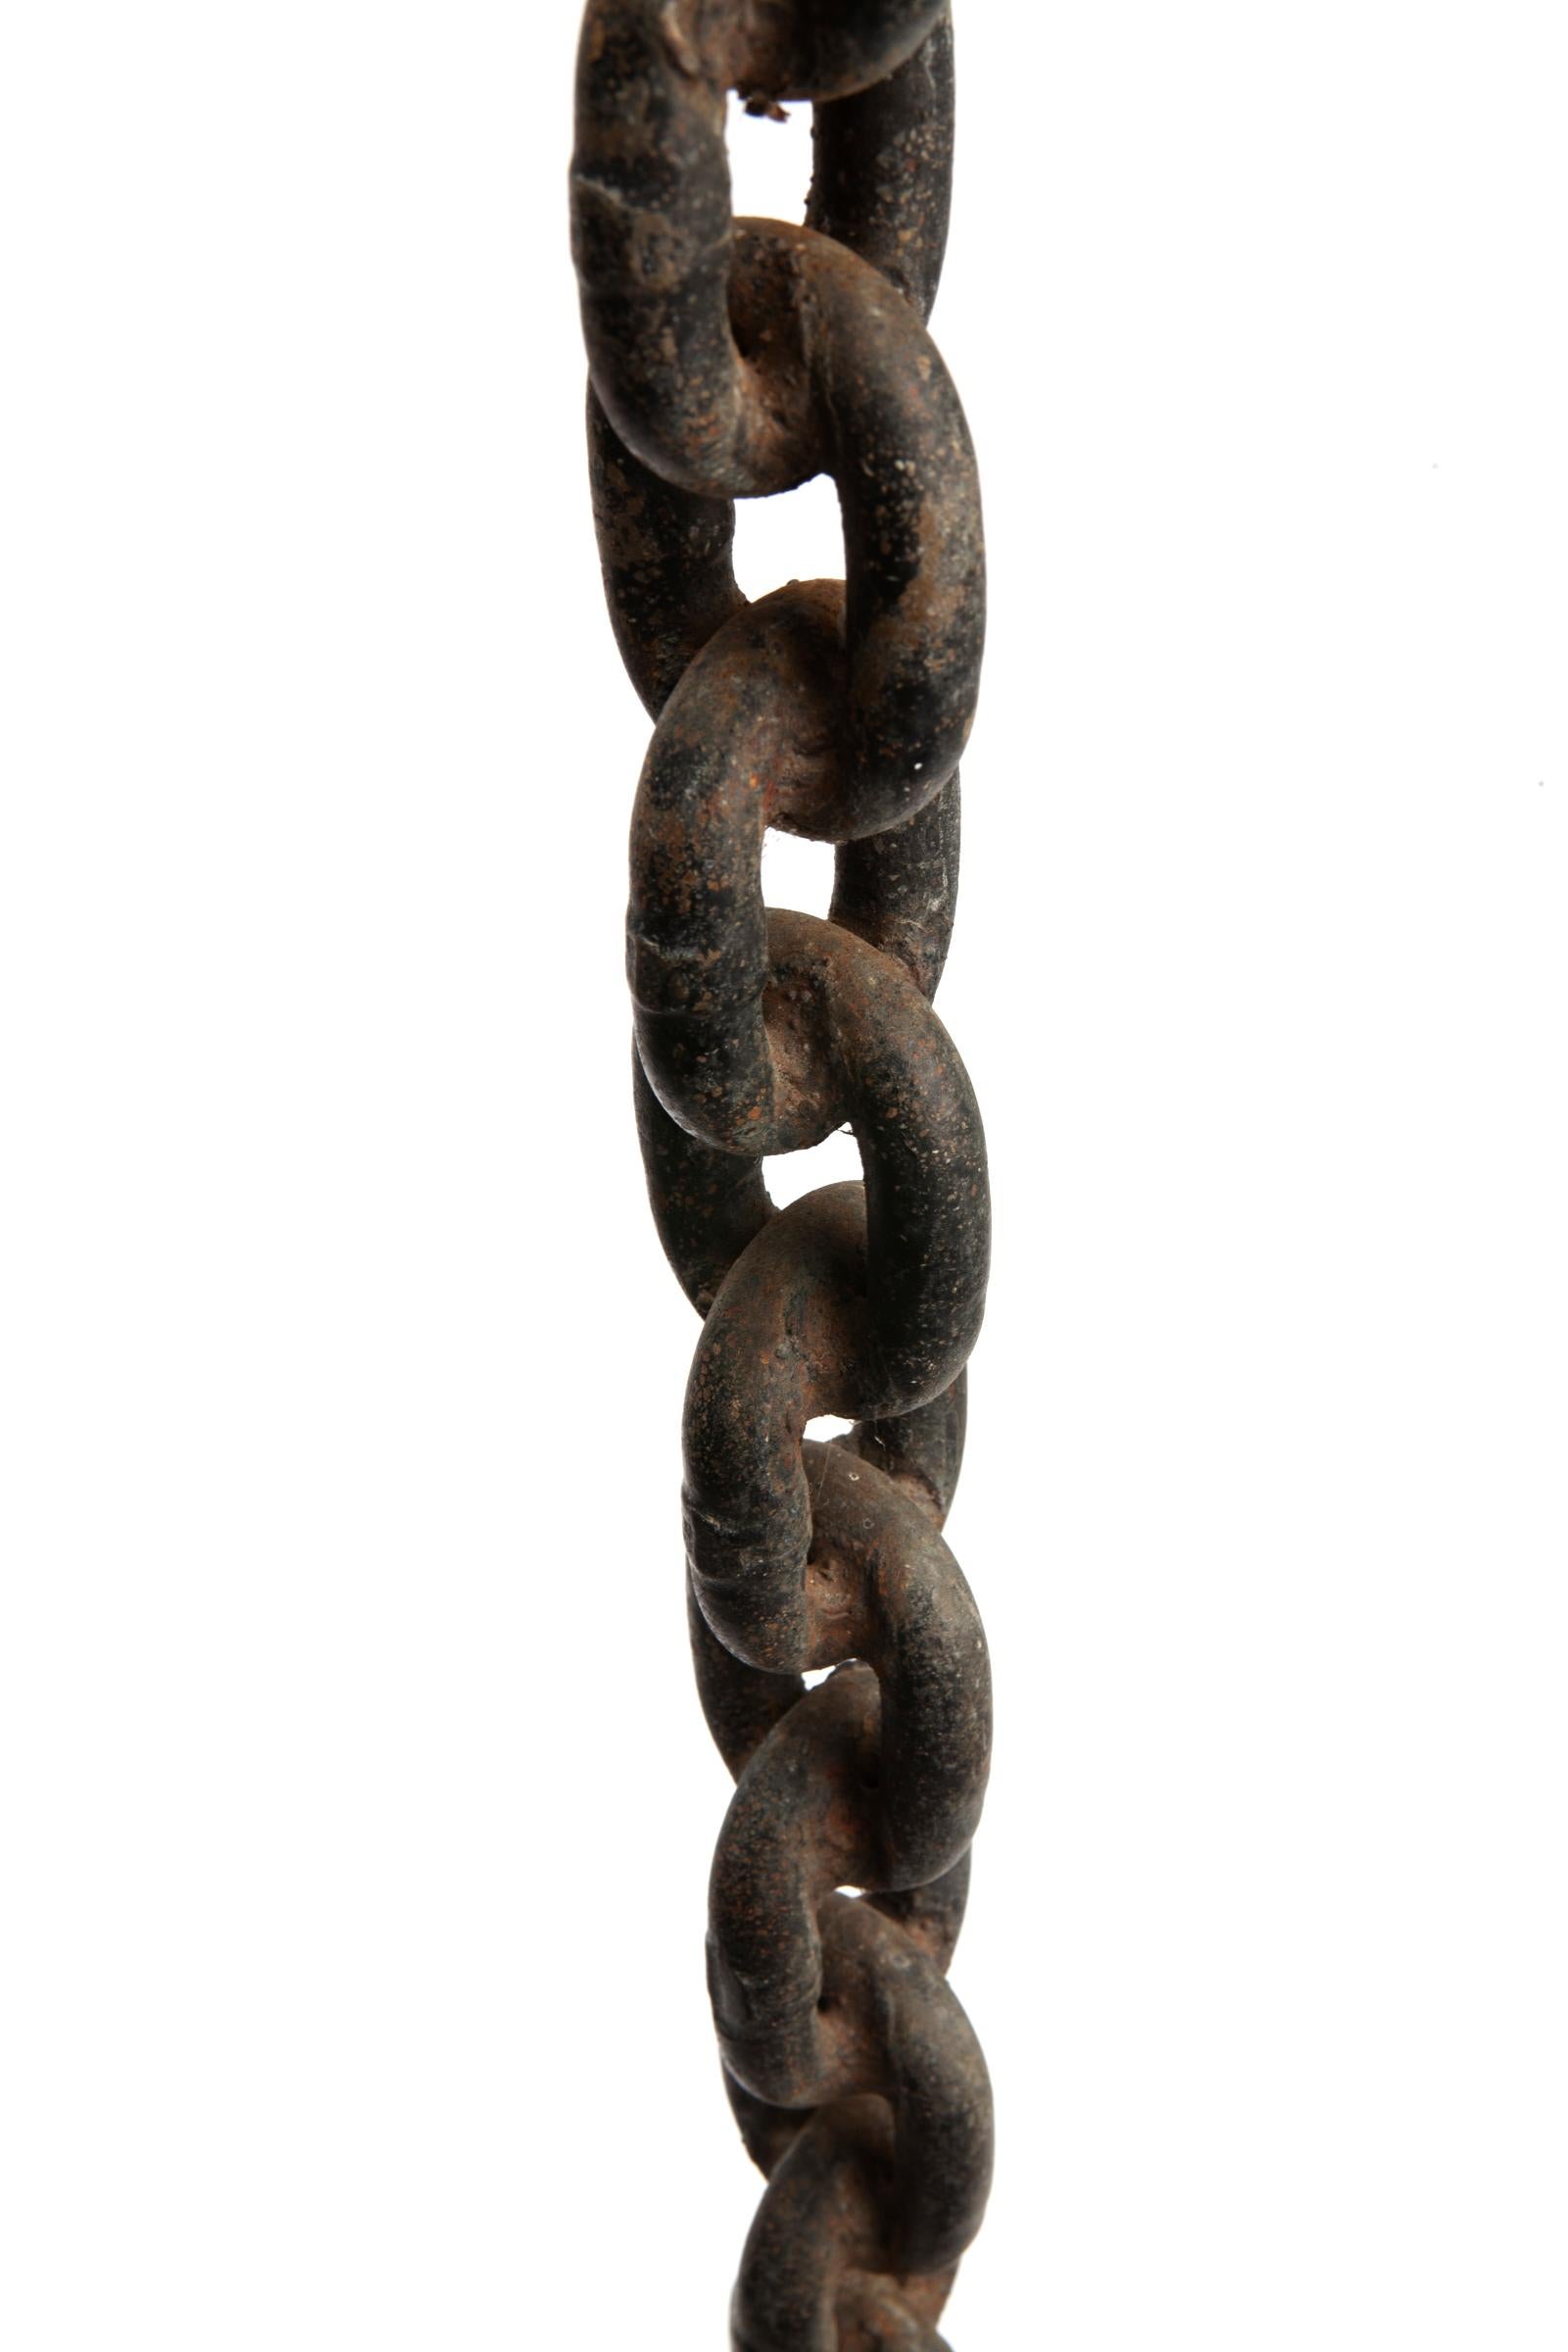 Brutalist Chain Link Sculpture For Sale 2